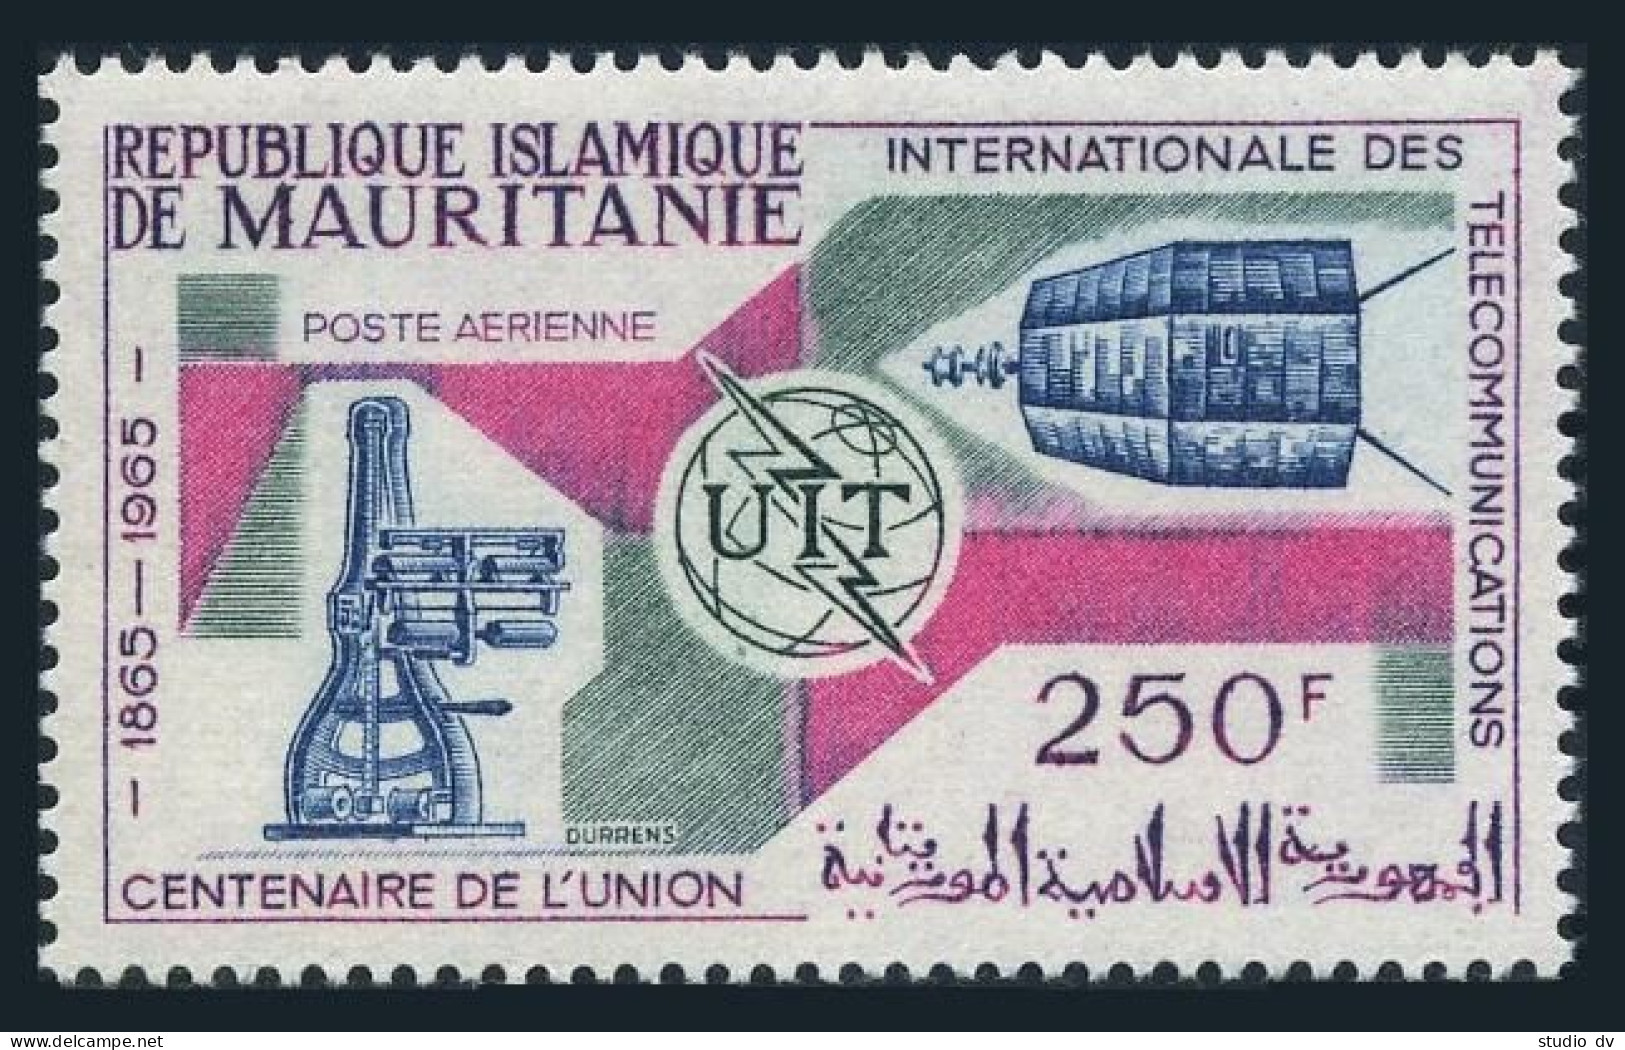 Mauritania C41,MNH.Michel 251. ITU-100,1965.Telegraph,Satellite. - Mauritania (1960-...)